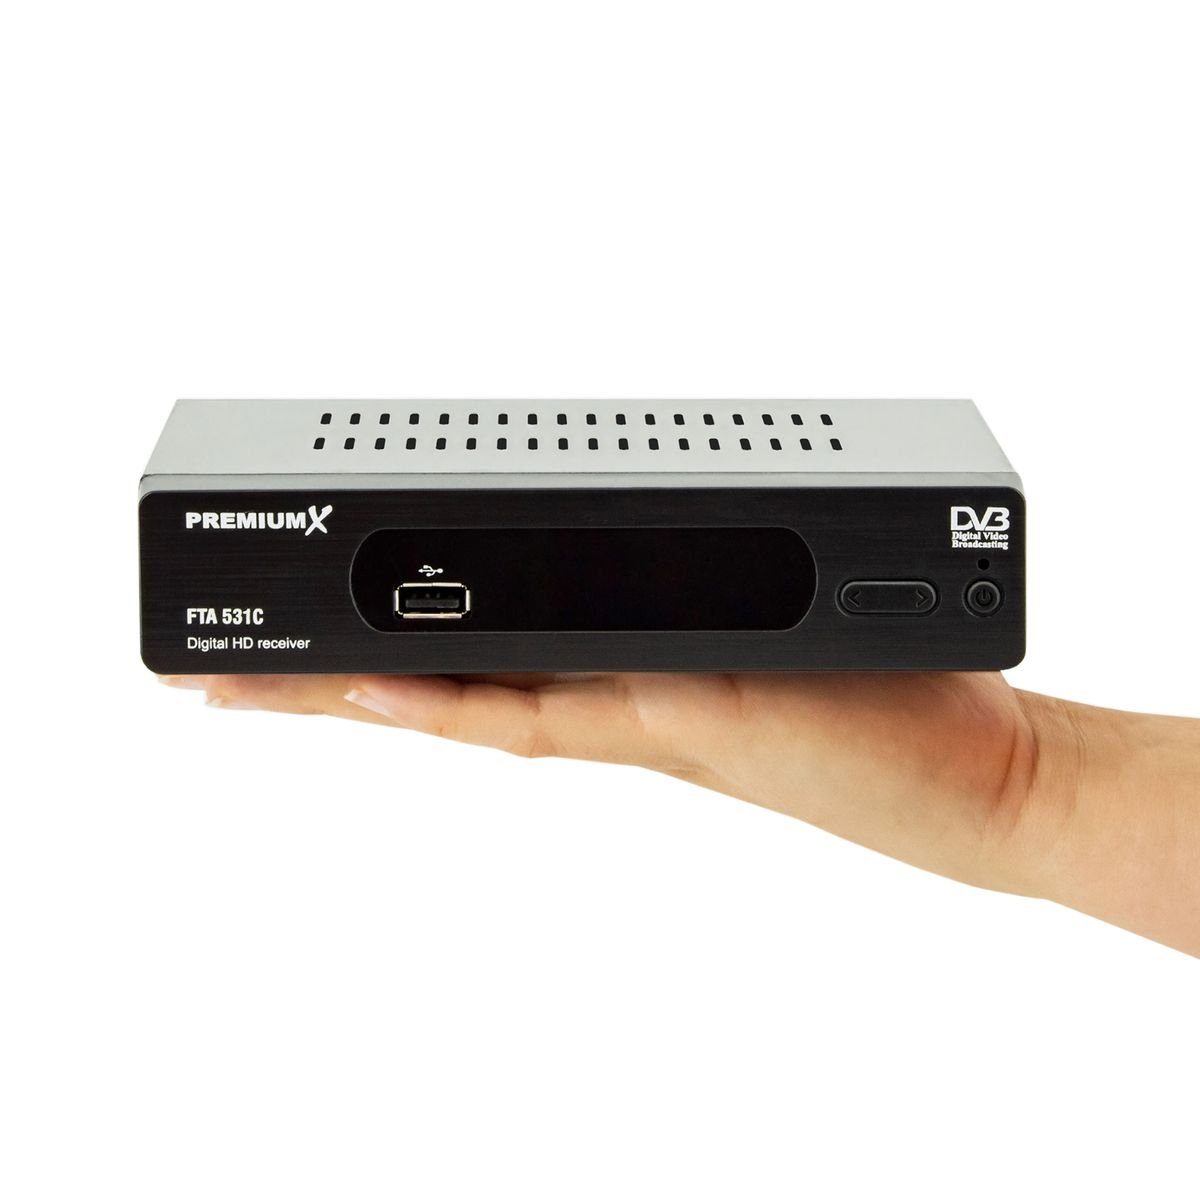 PremiumX FTA 531C Kabel Receiver FullHD HDMI Digital DVB-C TV USB SCART Kabel-Receiver